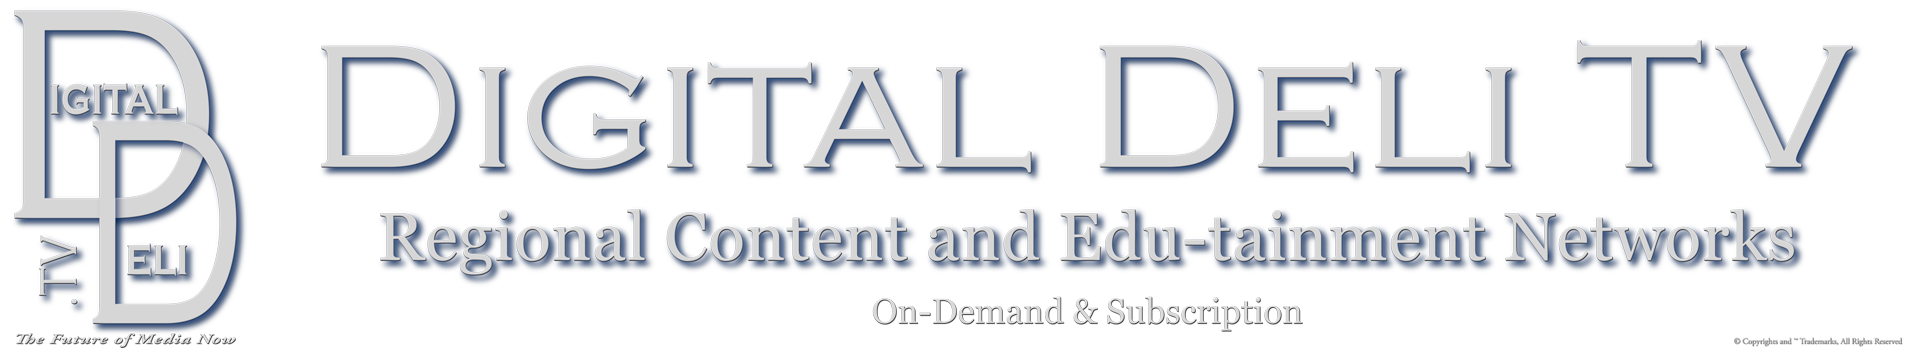 DigitalDeli.tv Properties & Brands Imprint, Regional Content and Edu-tainment Networks